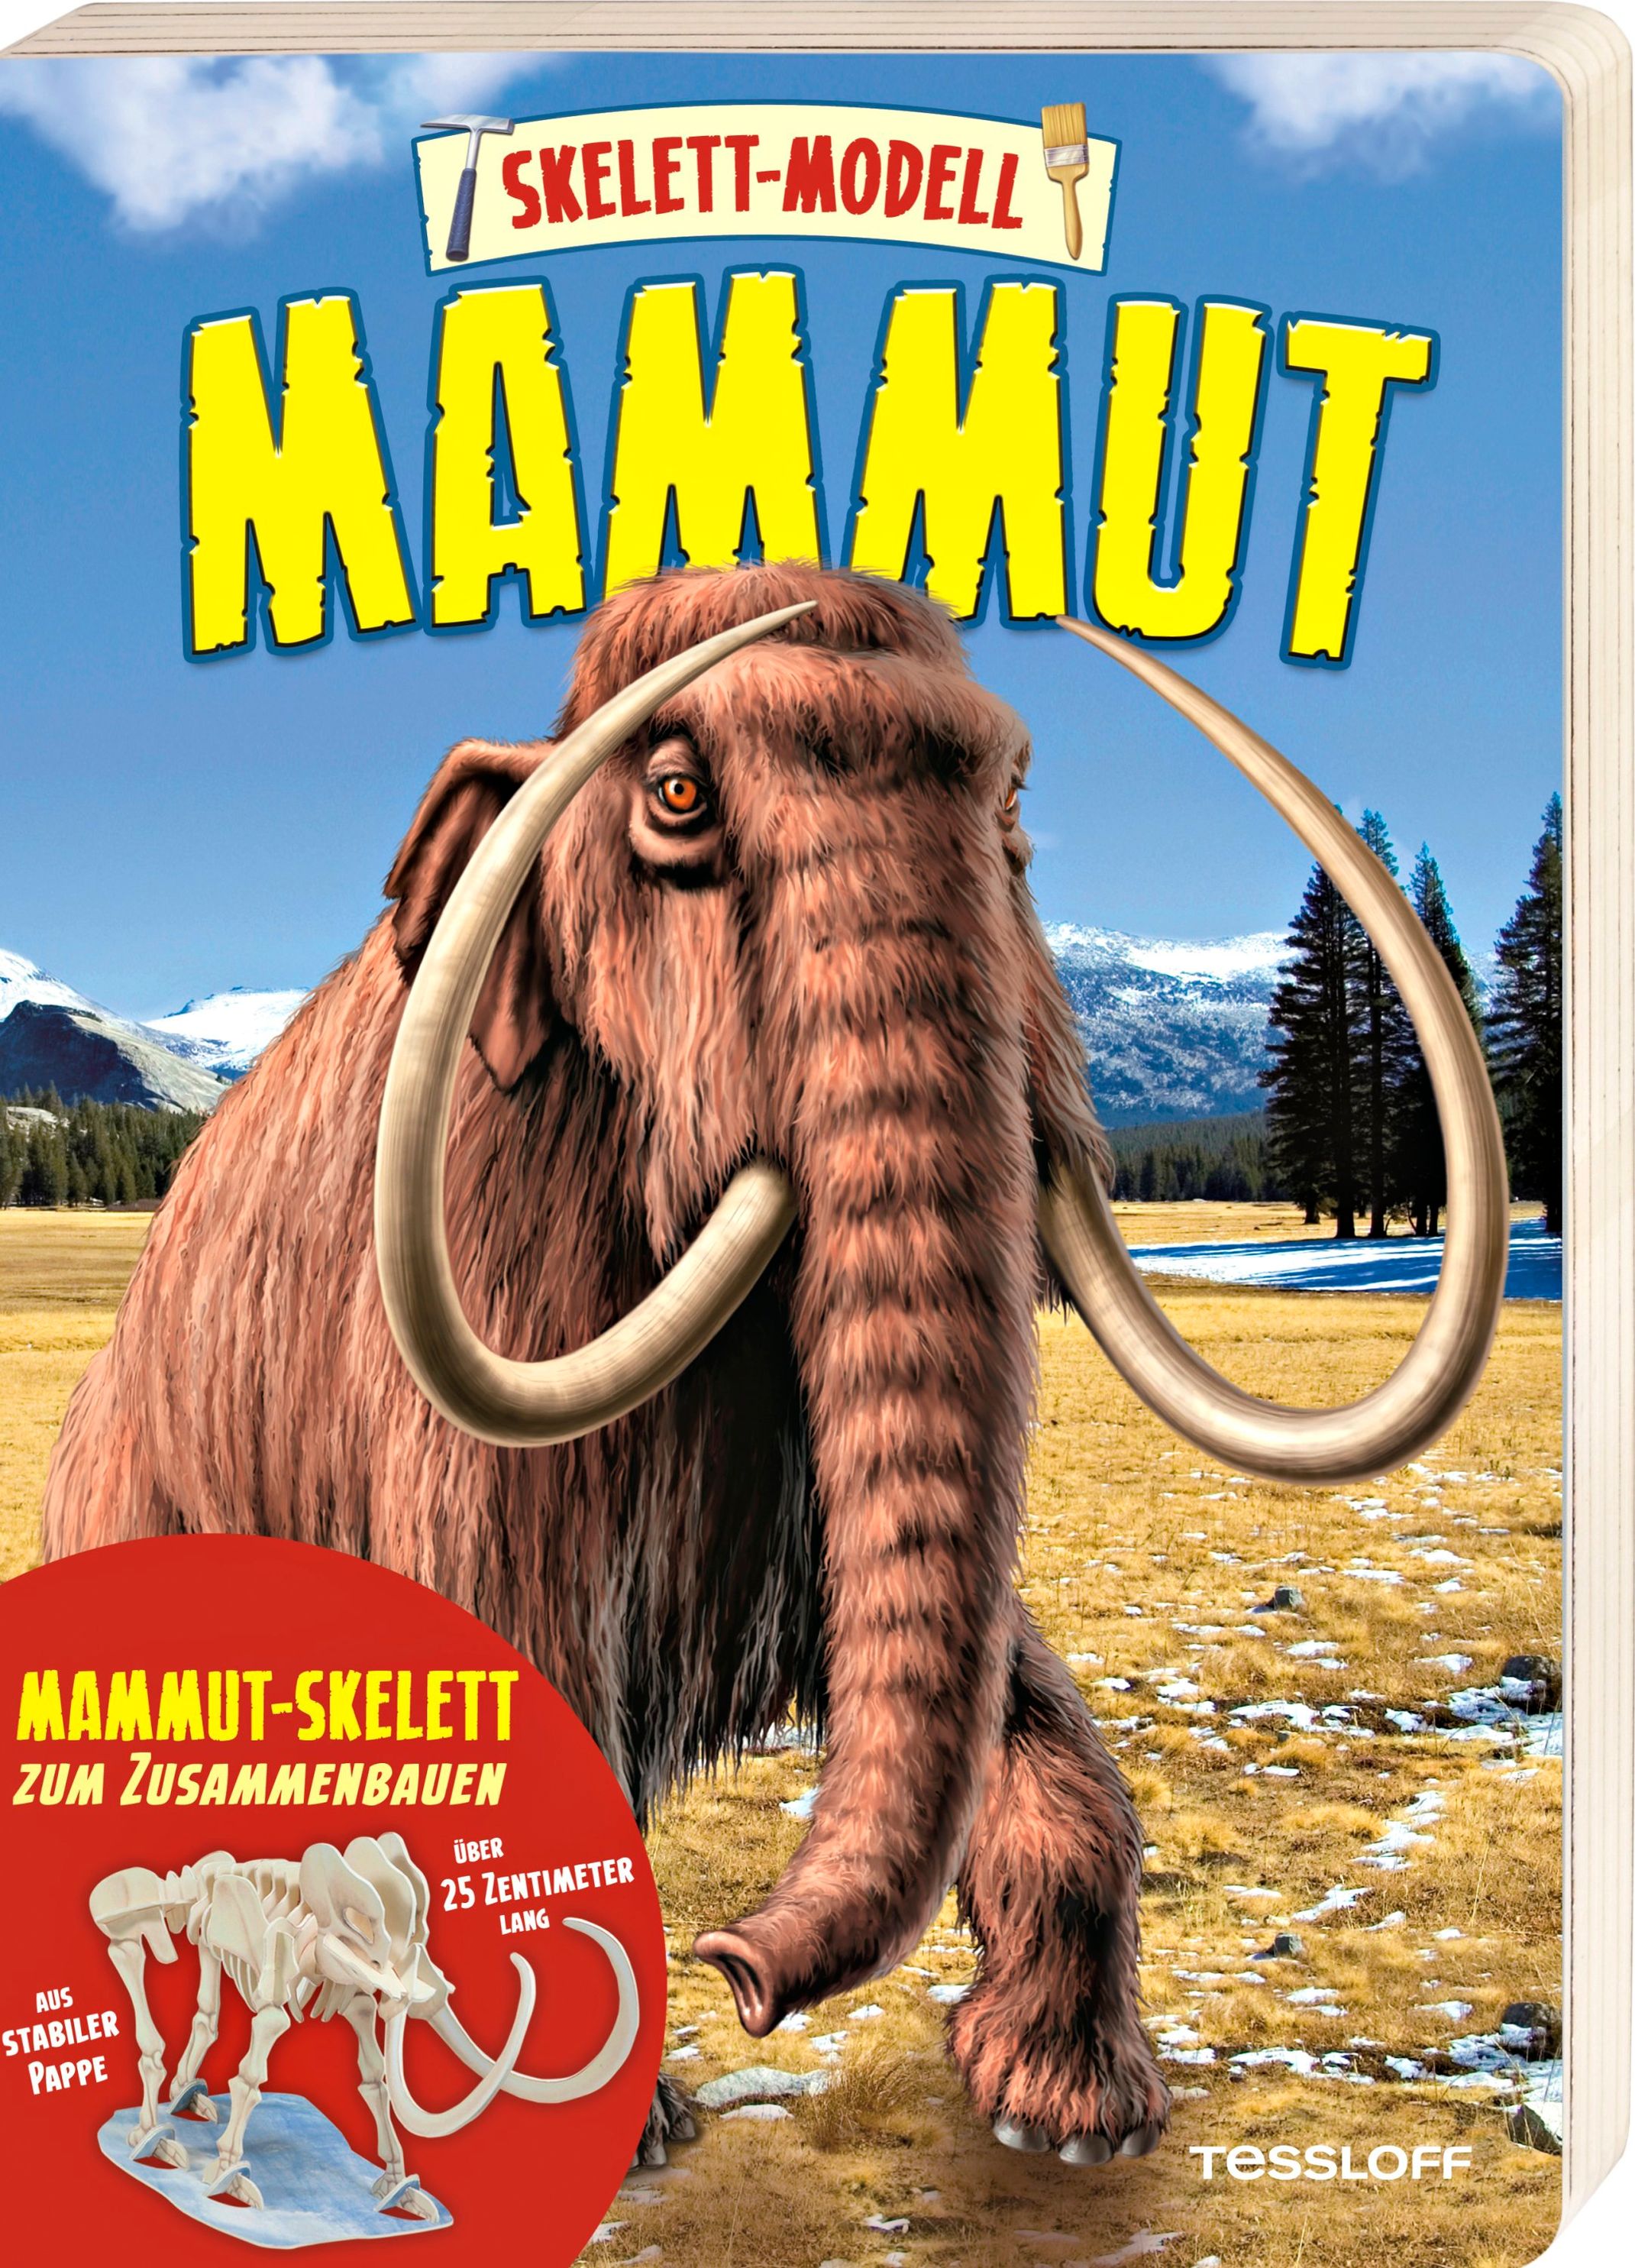 Skelett Modell Mammut Buch Online Bestellen Jokers De